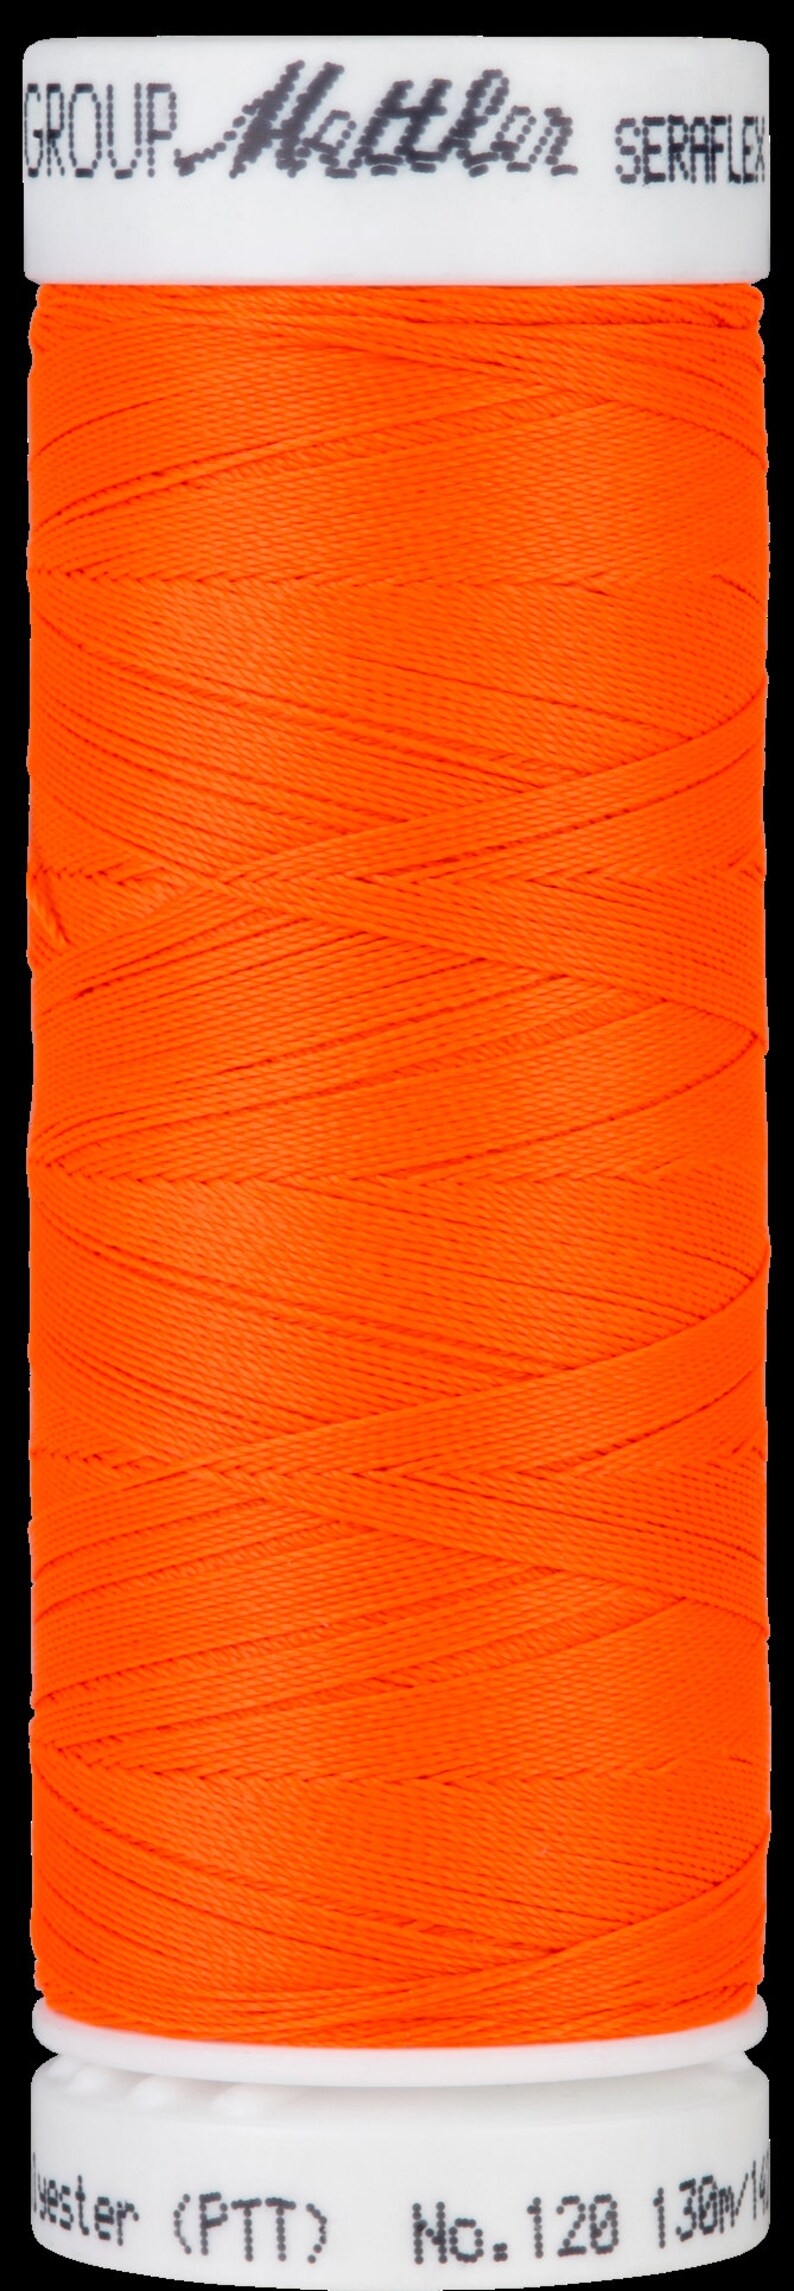 NEW colors Seraflex 120 flexible thread sewing thread brown beige gray neon Mettler vivid orange